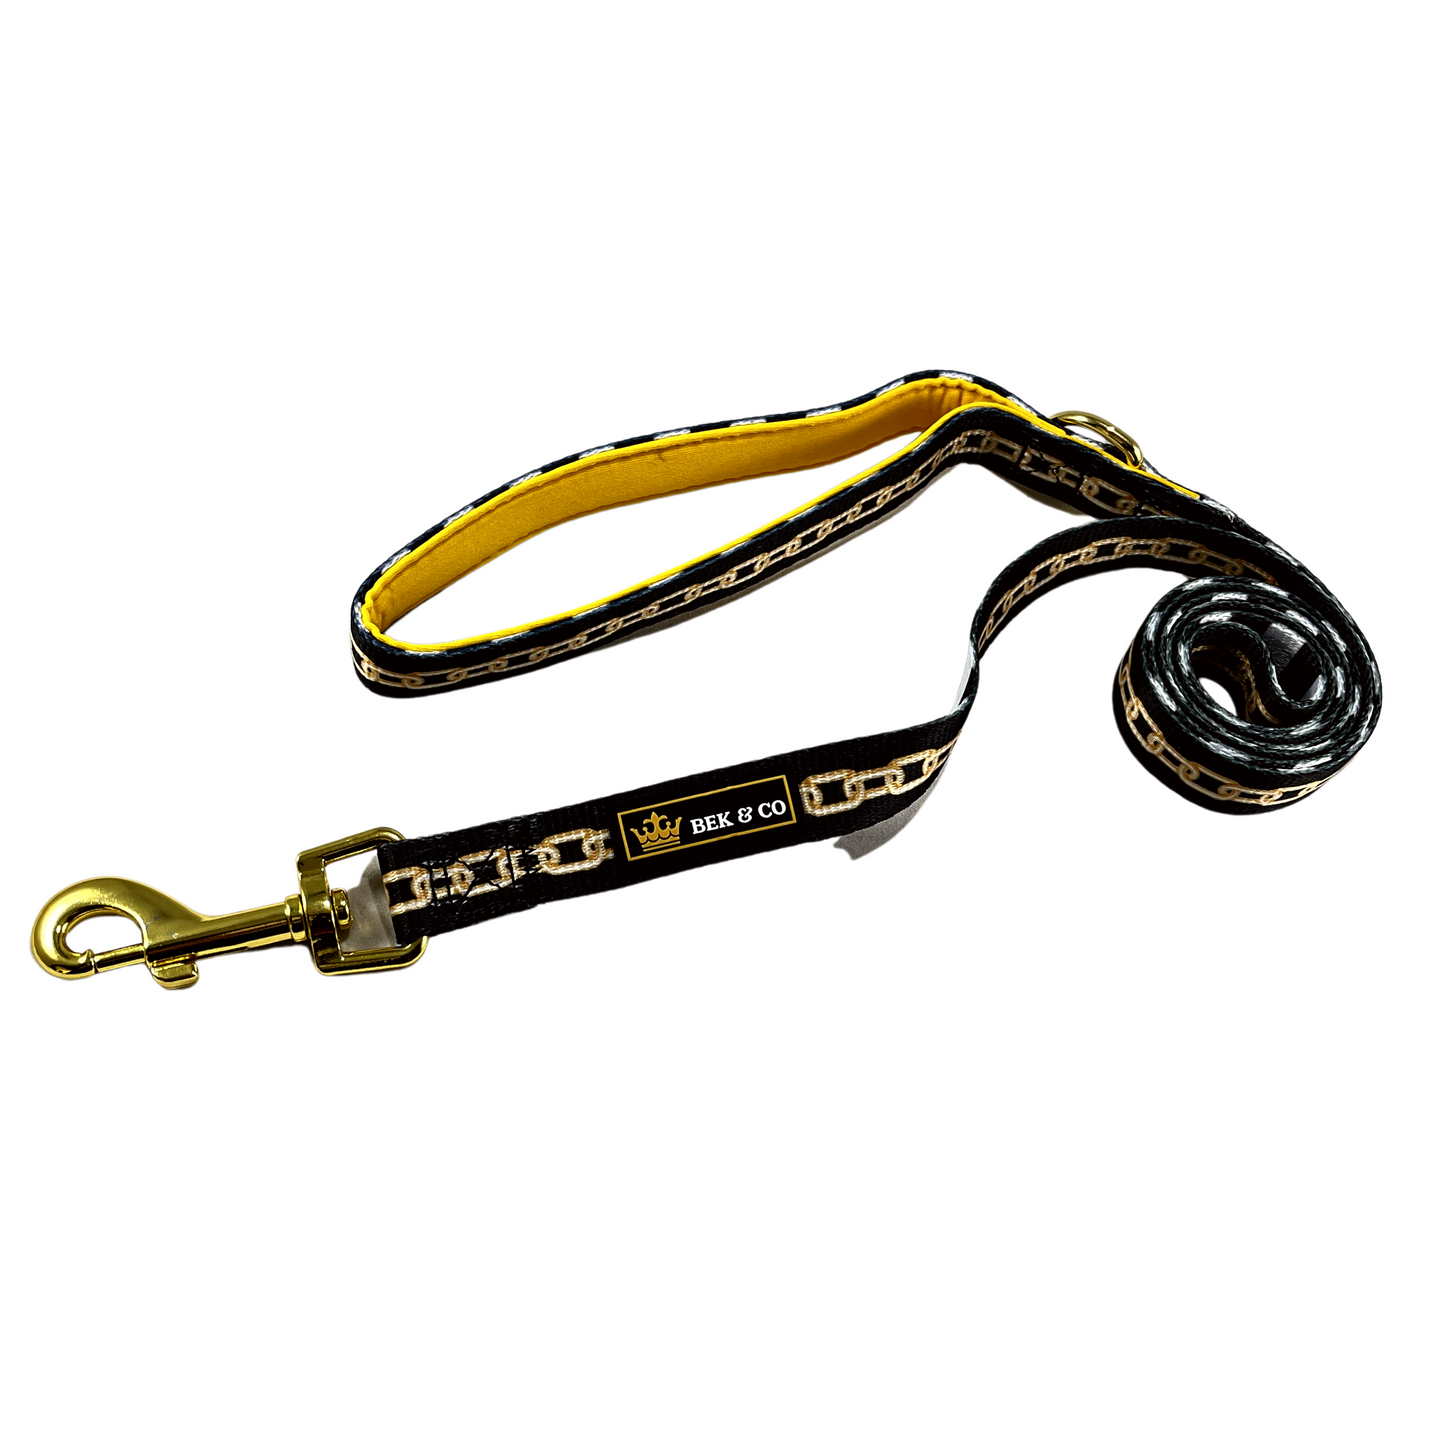 Royal dual sided dog leash on white background